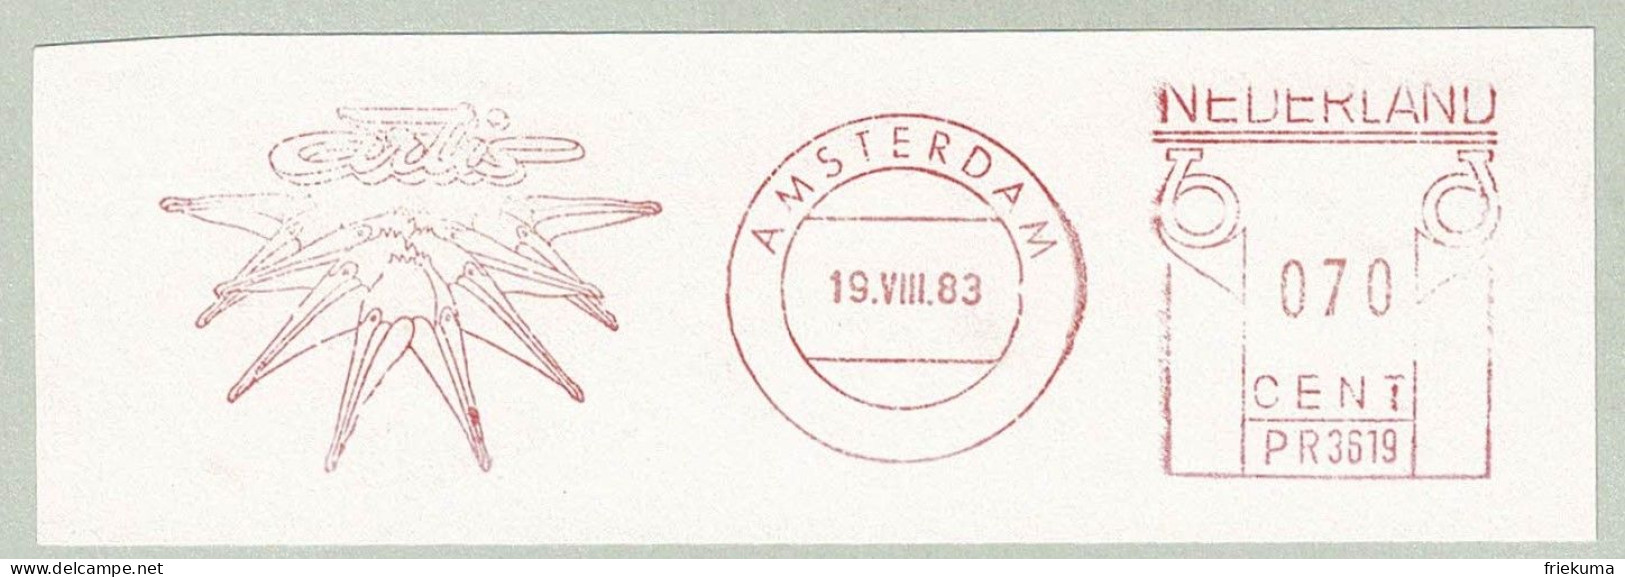 Niederlande / Nederland 1983, Freistempel / EMA / Meterstamp Amsterdam, Pelikane / Pelicans / Pelecanus - Pelicans